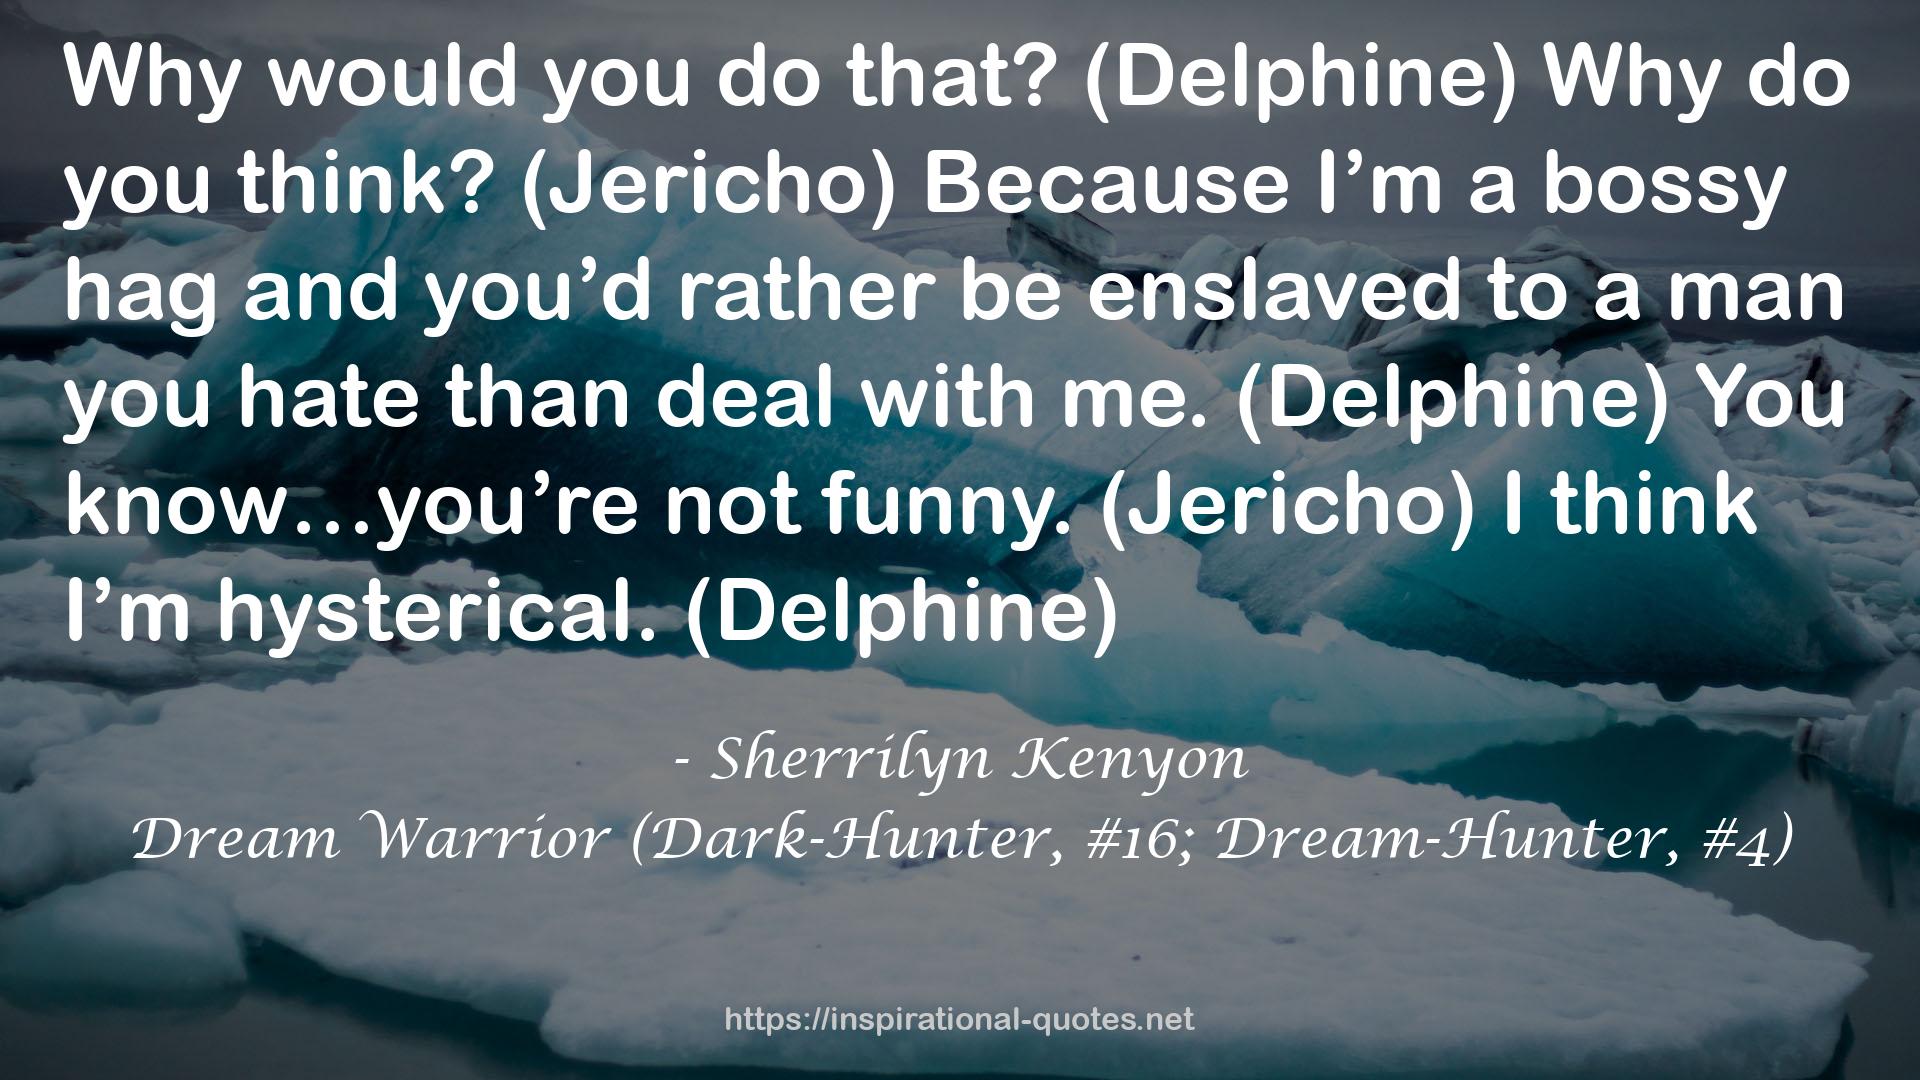 Dream Warrior (Dark-Hunter, #16; Dream-Hunter, #4) QUOTES